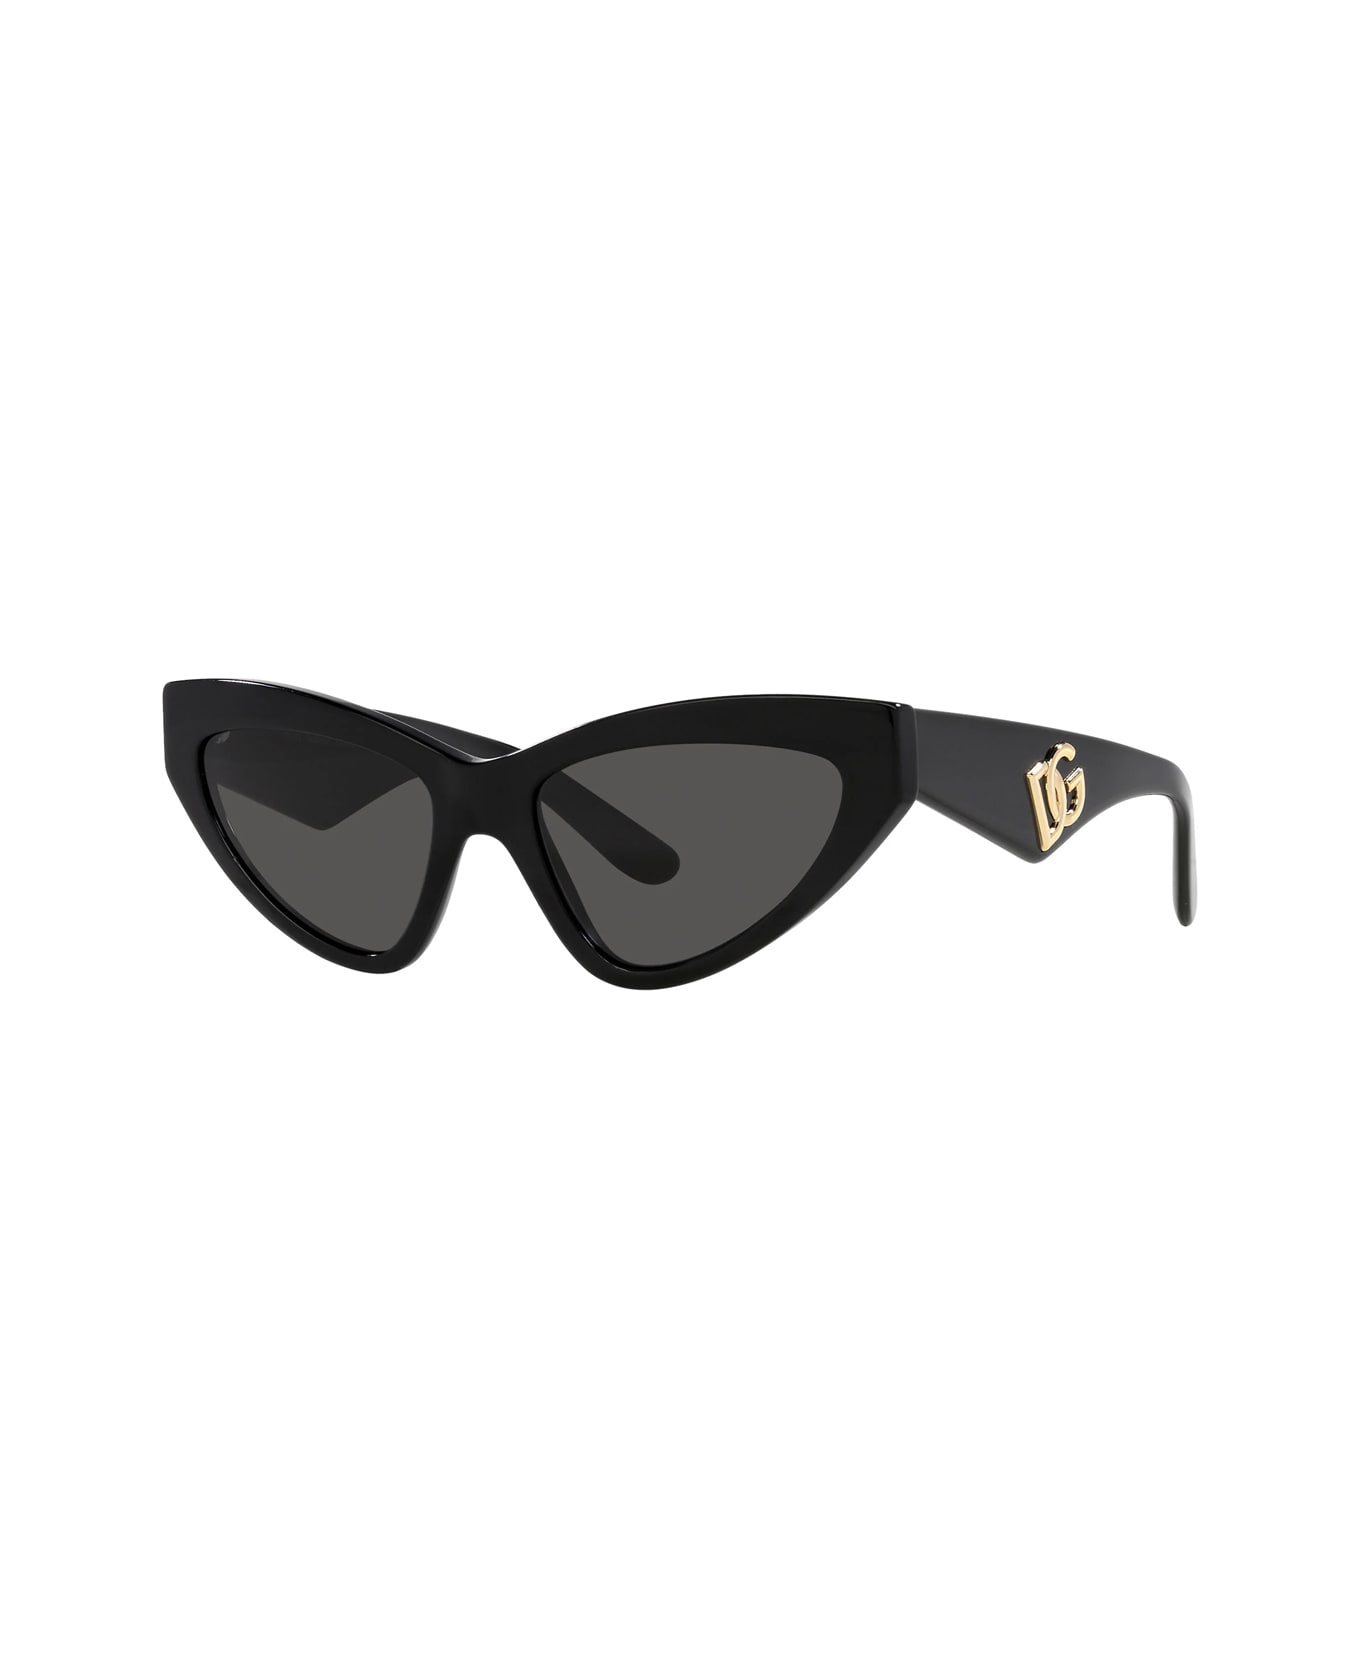 Dolce & Gabbana Eyewear Dg4439 501/87 Sunglasses - Nero サングラス